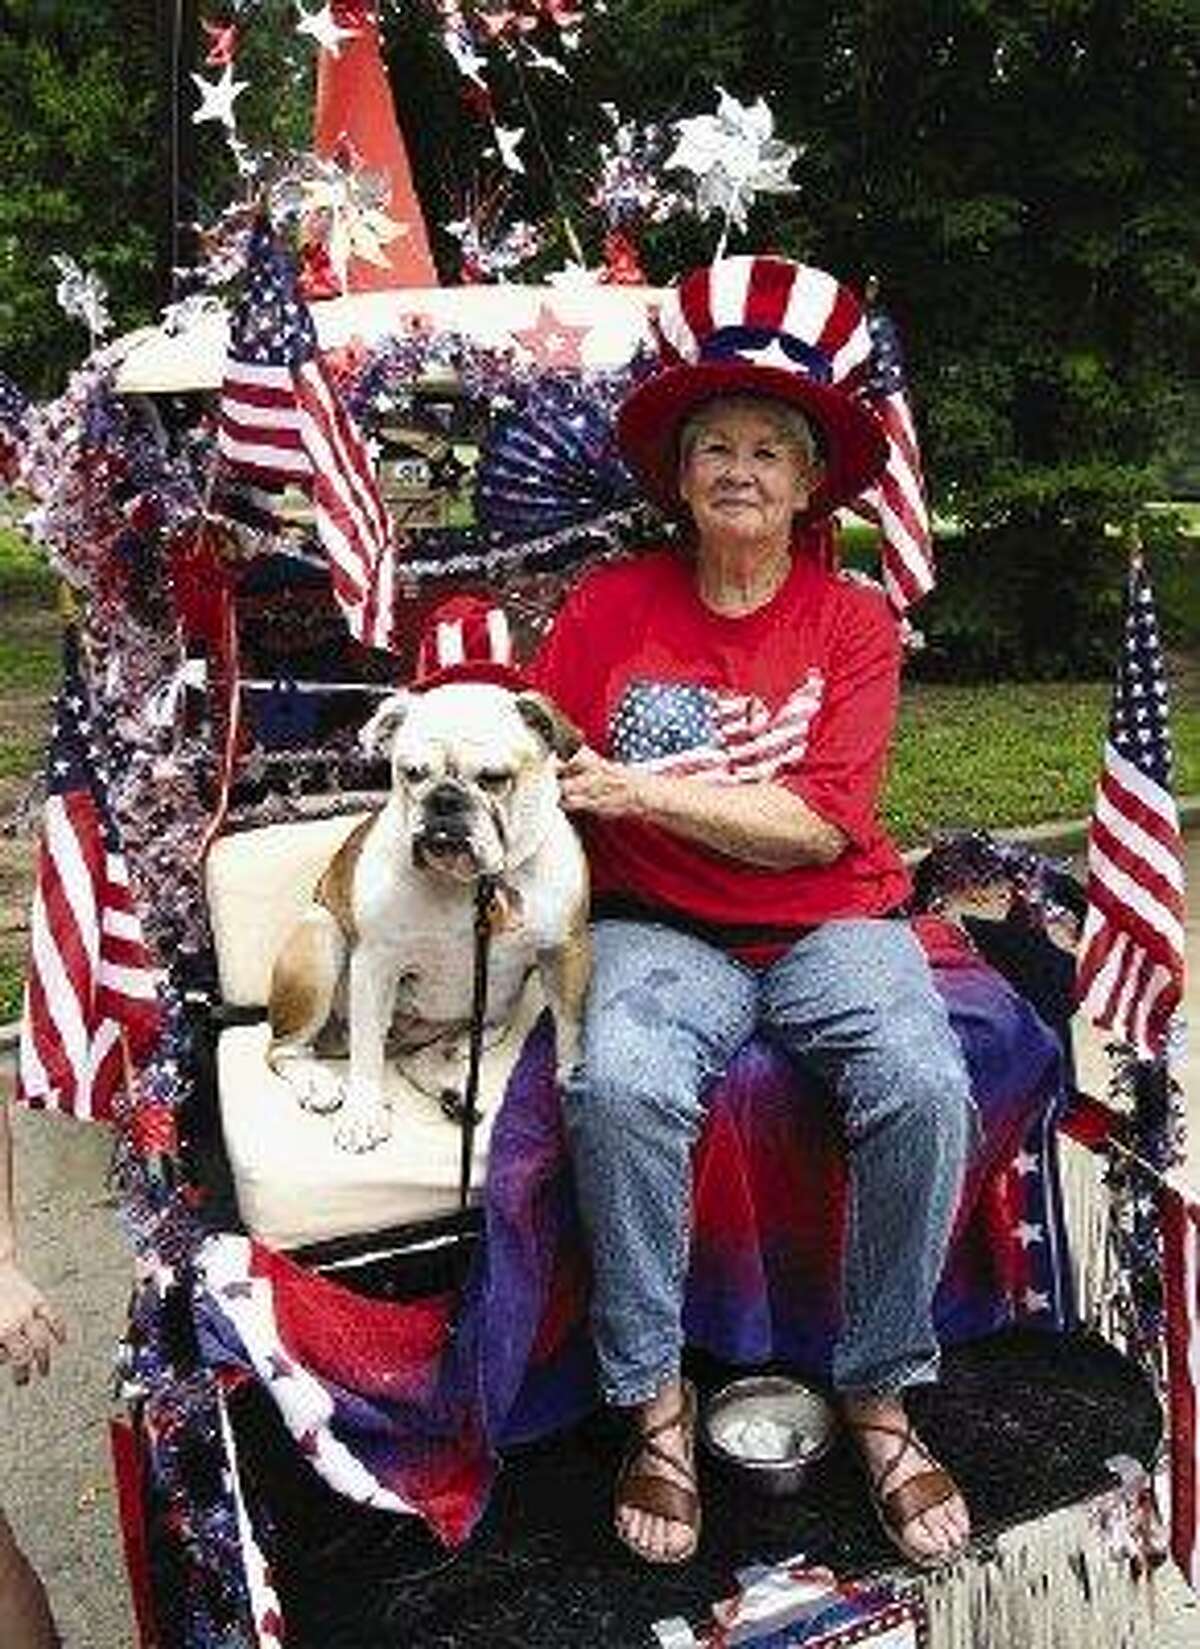 Wynona Ballard's elaborately decorated golf cart included a special passenger: Kora, her one-year-old English bulldog.